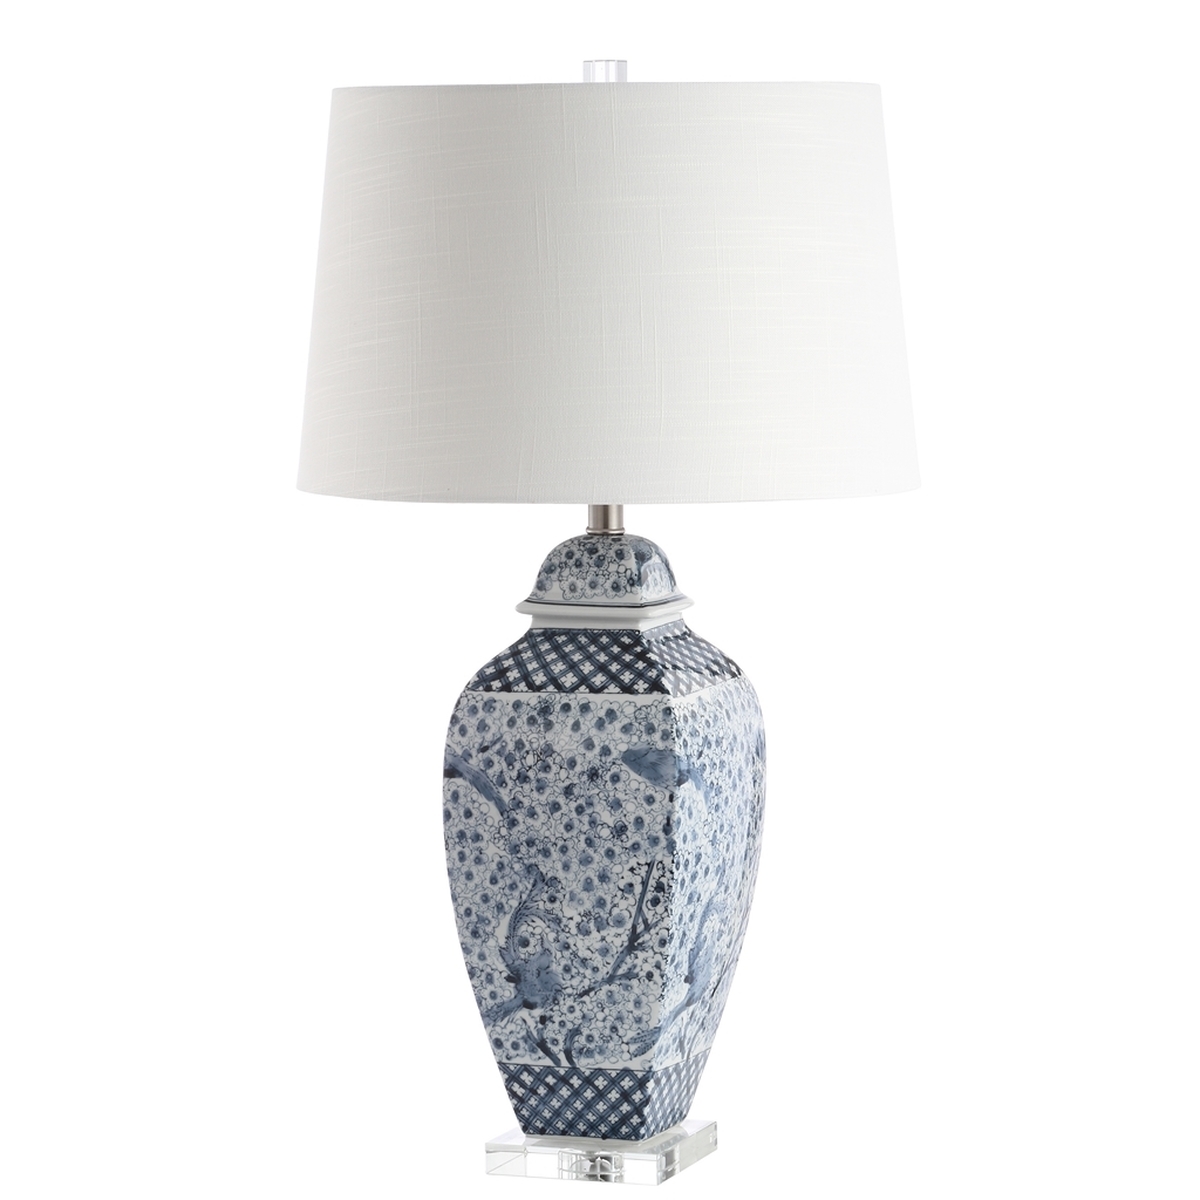 Braeden Table Lamp - Blue/White - Safavieh - Image 0